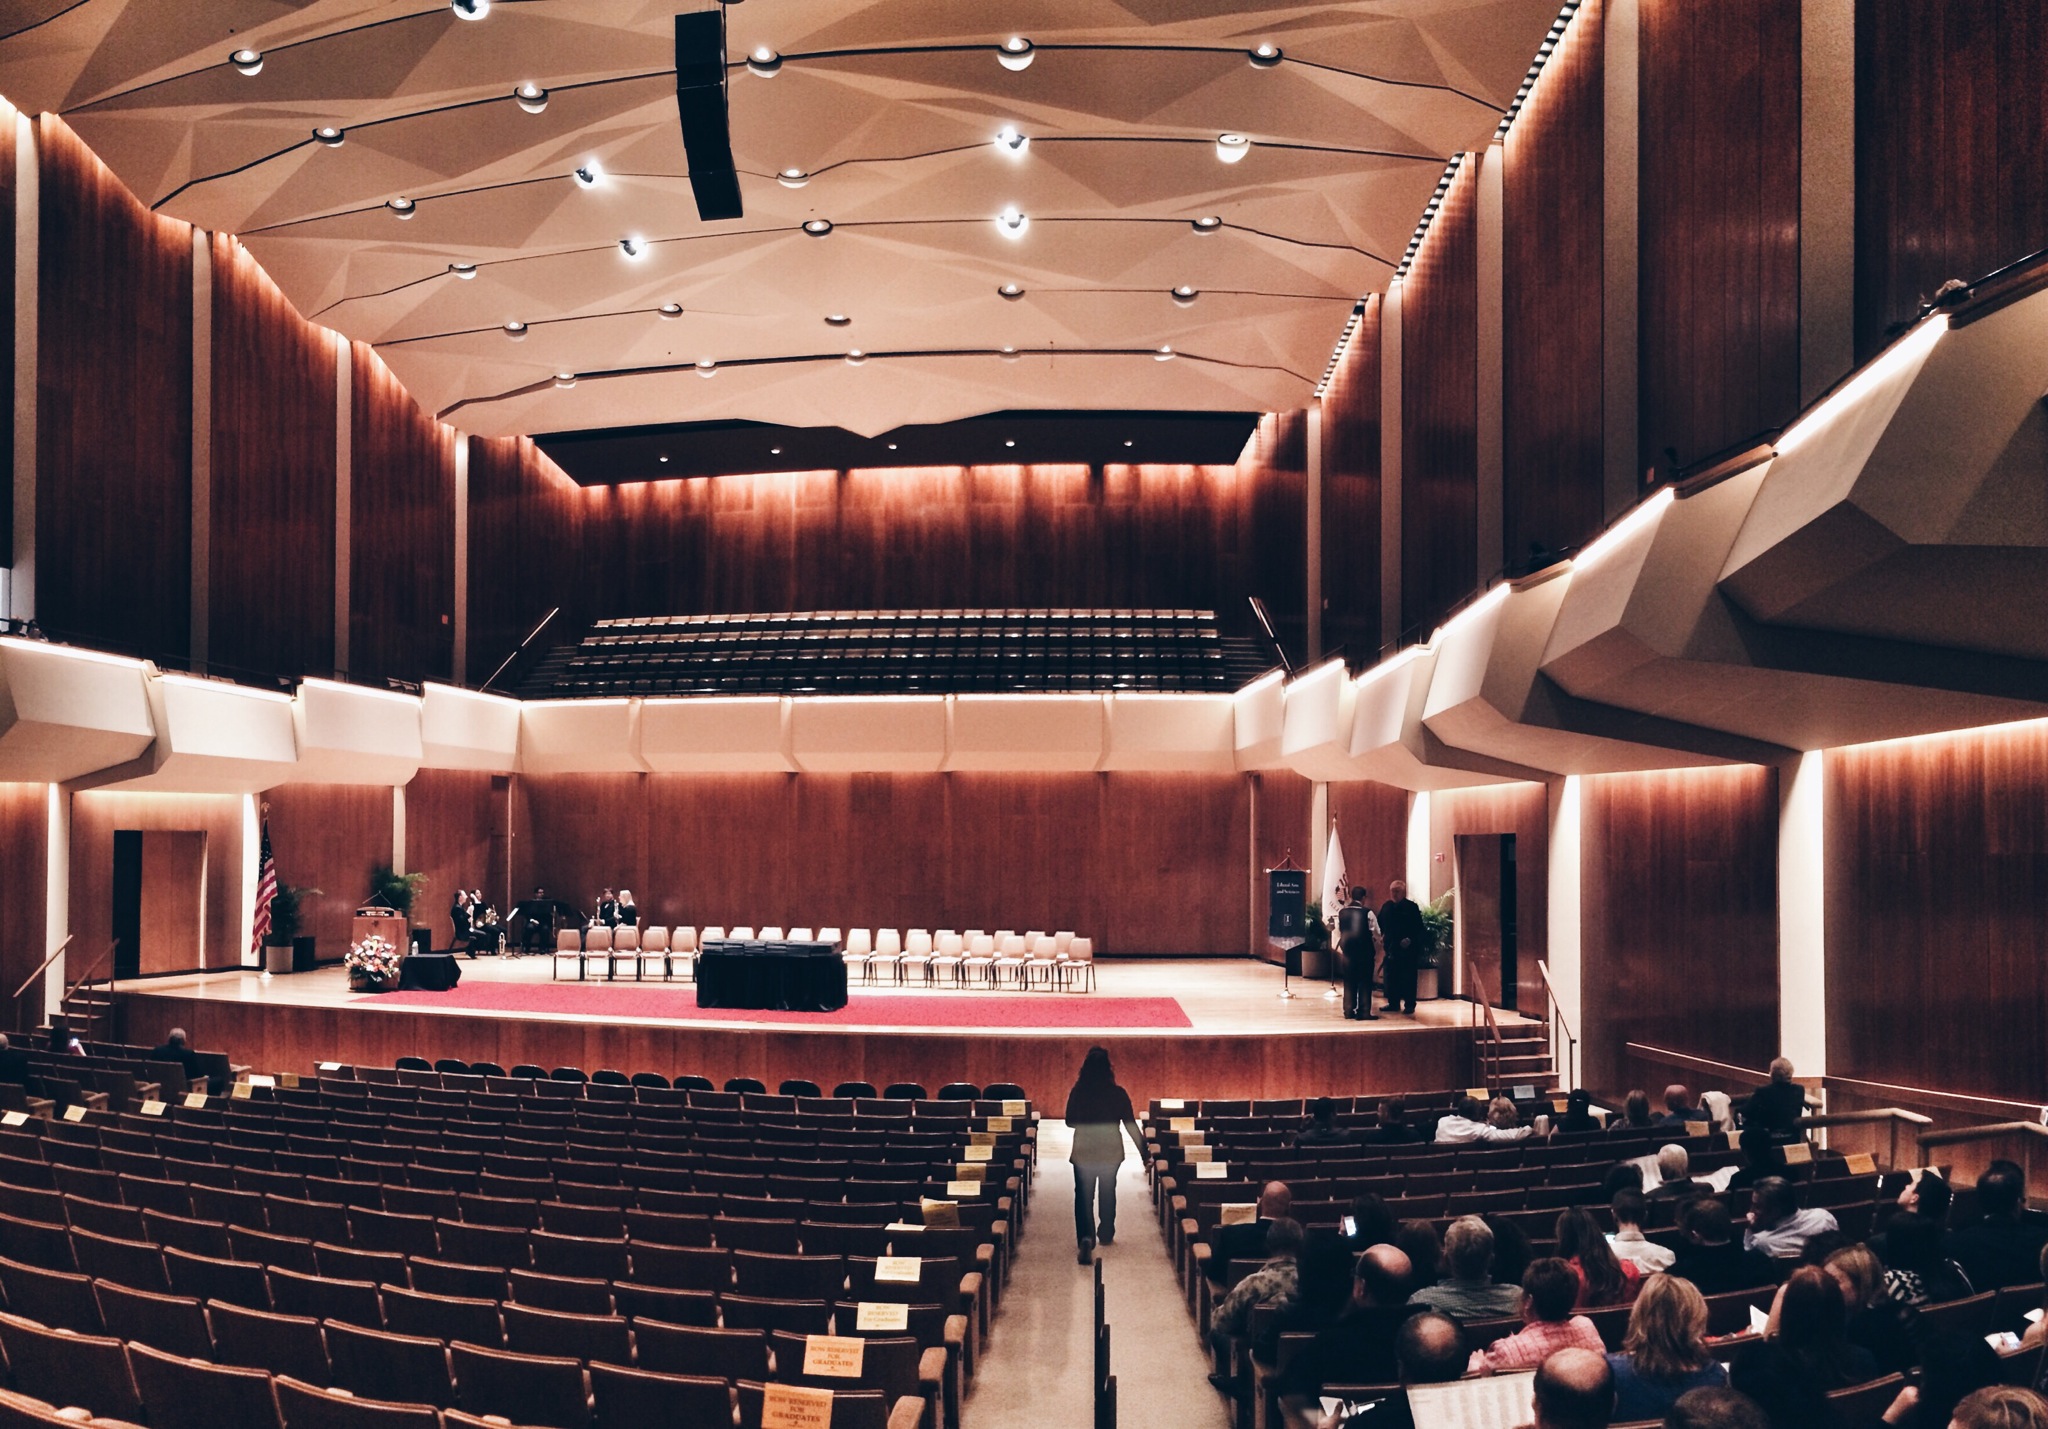 Krannert Center for the Performing Arts 2021 show schedule & venue